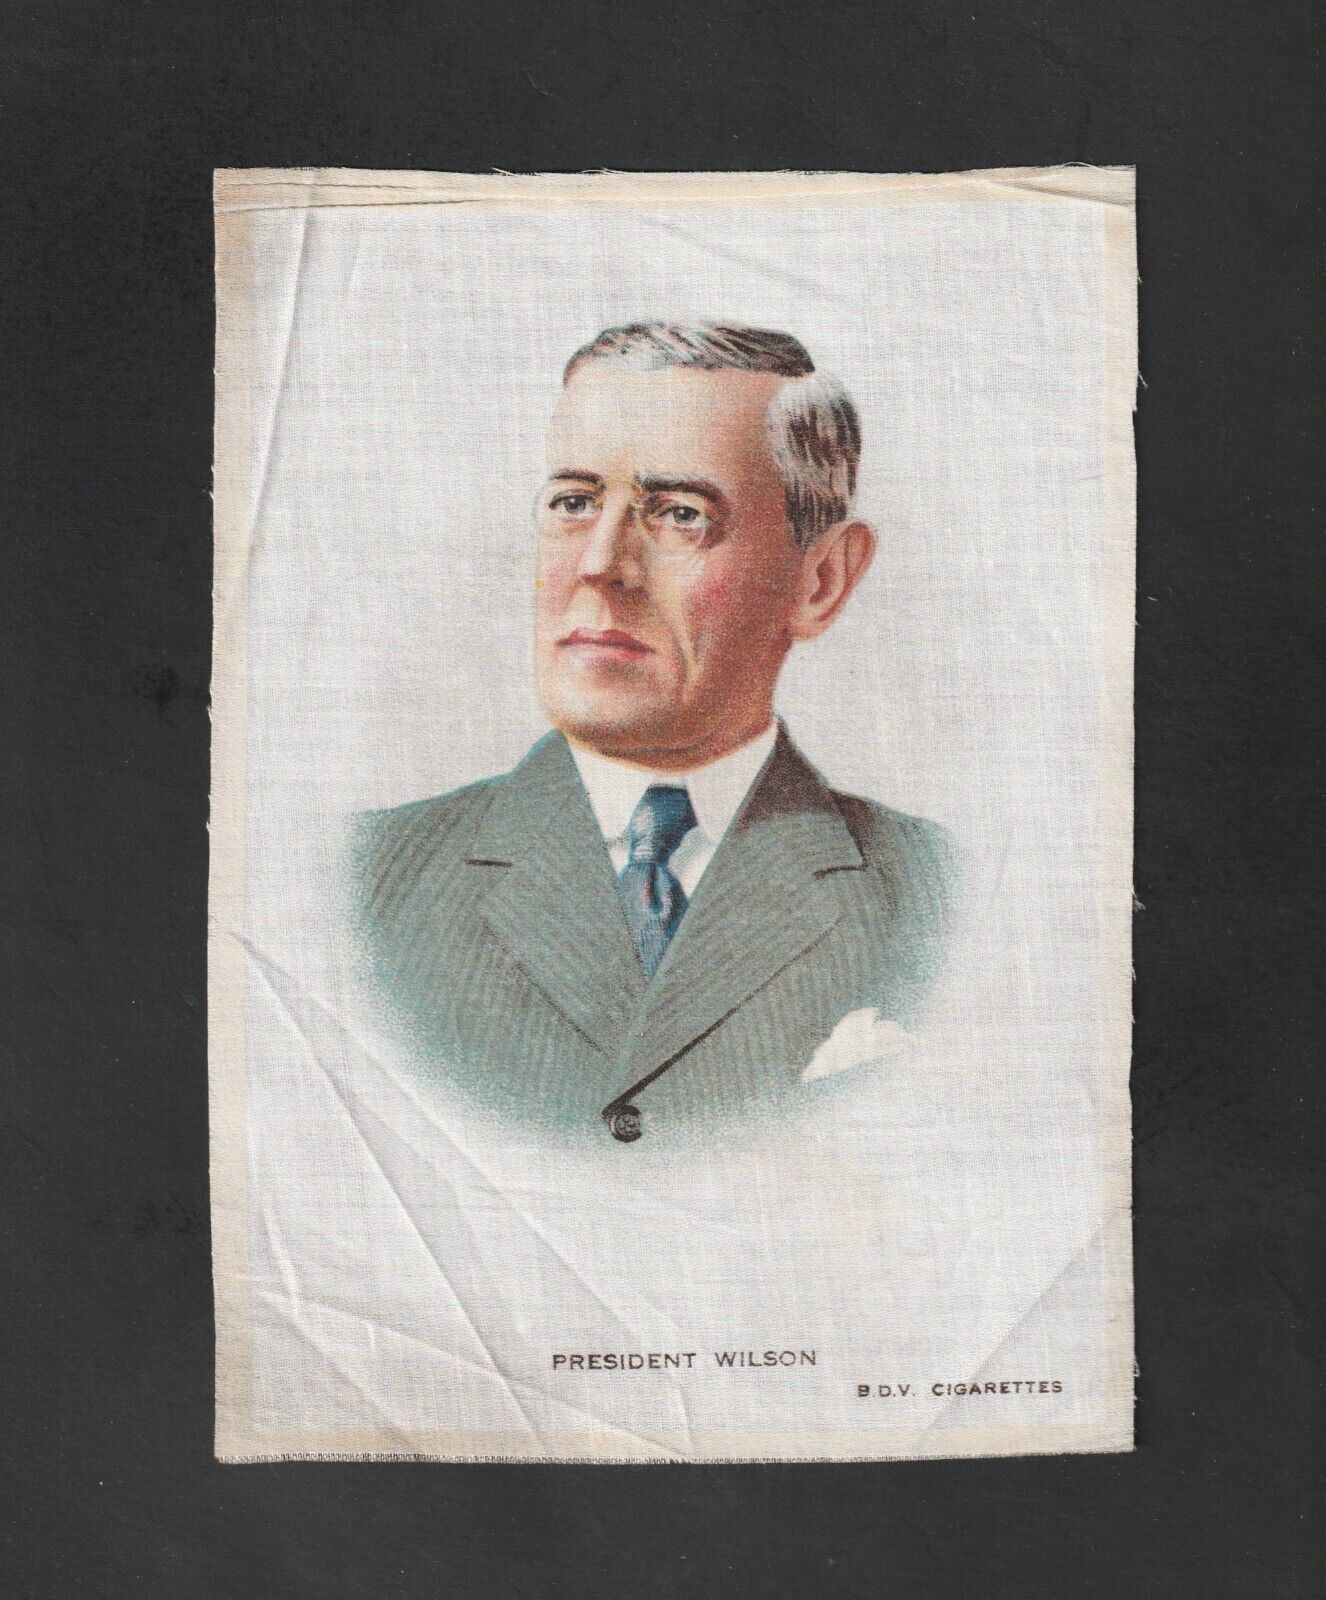 Amazing 1916 BDV Cigarettes President Woodrow Wilson Silk